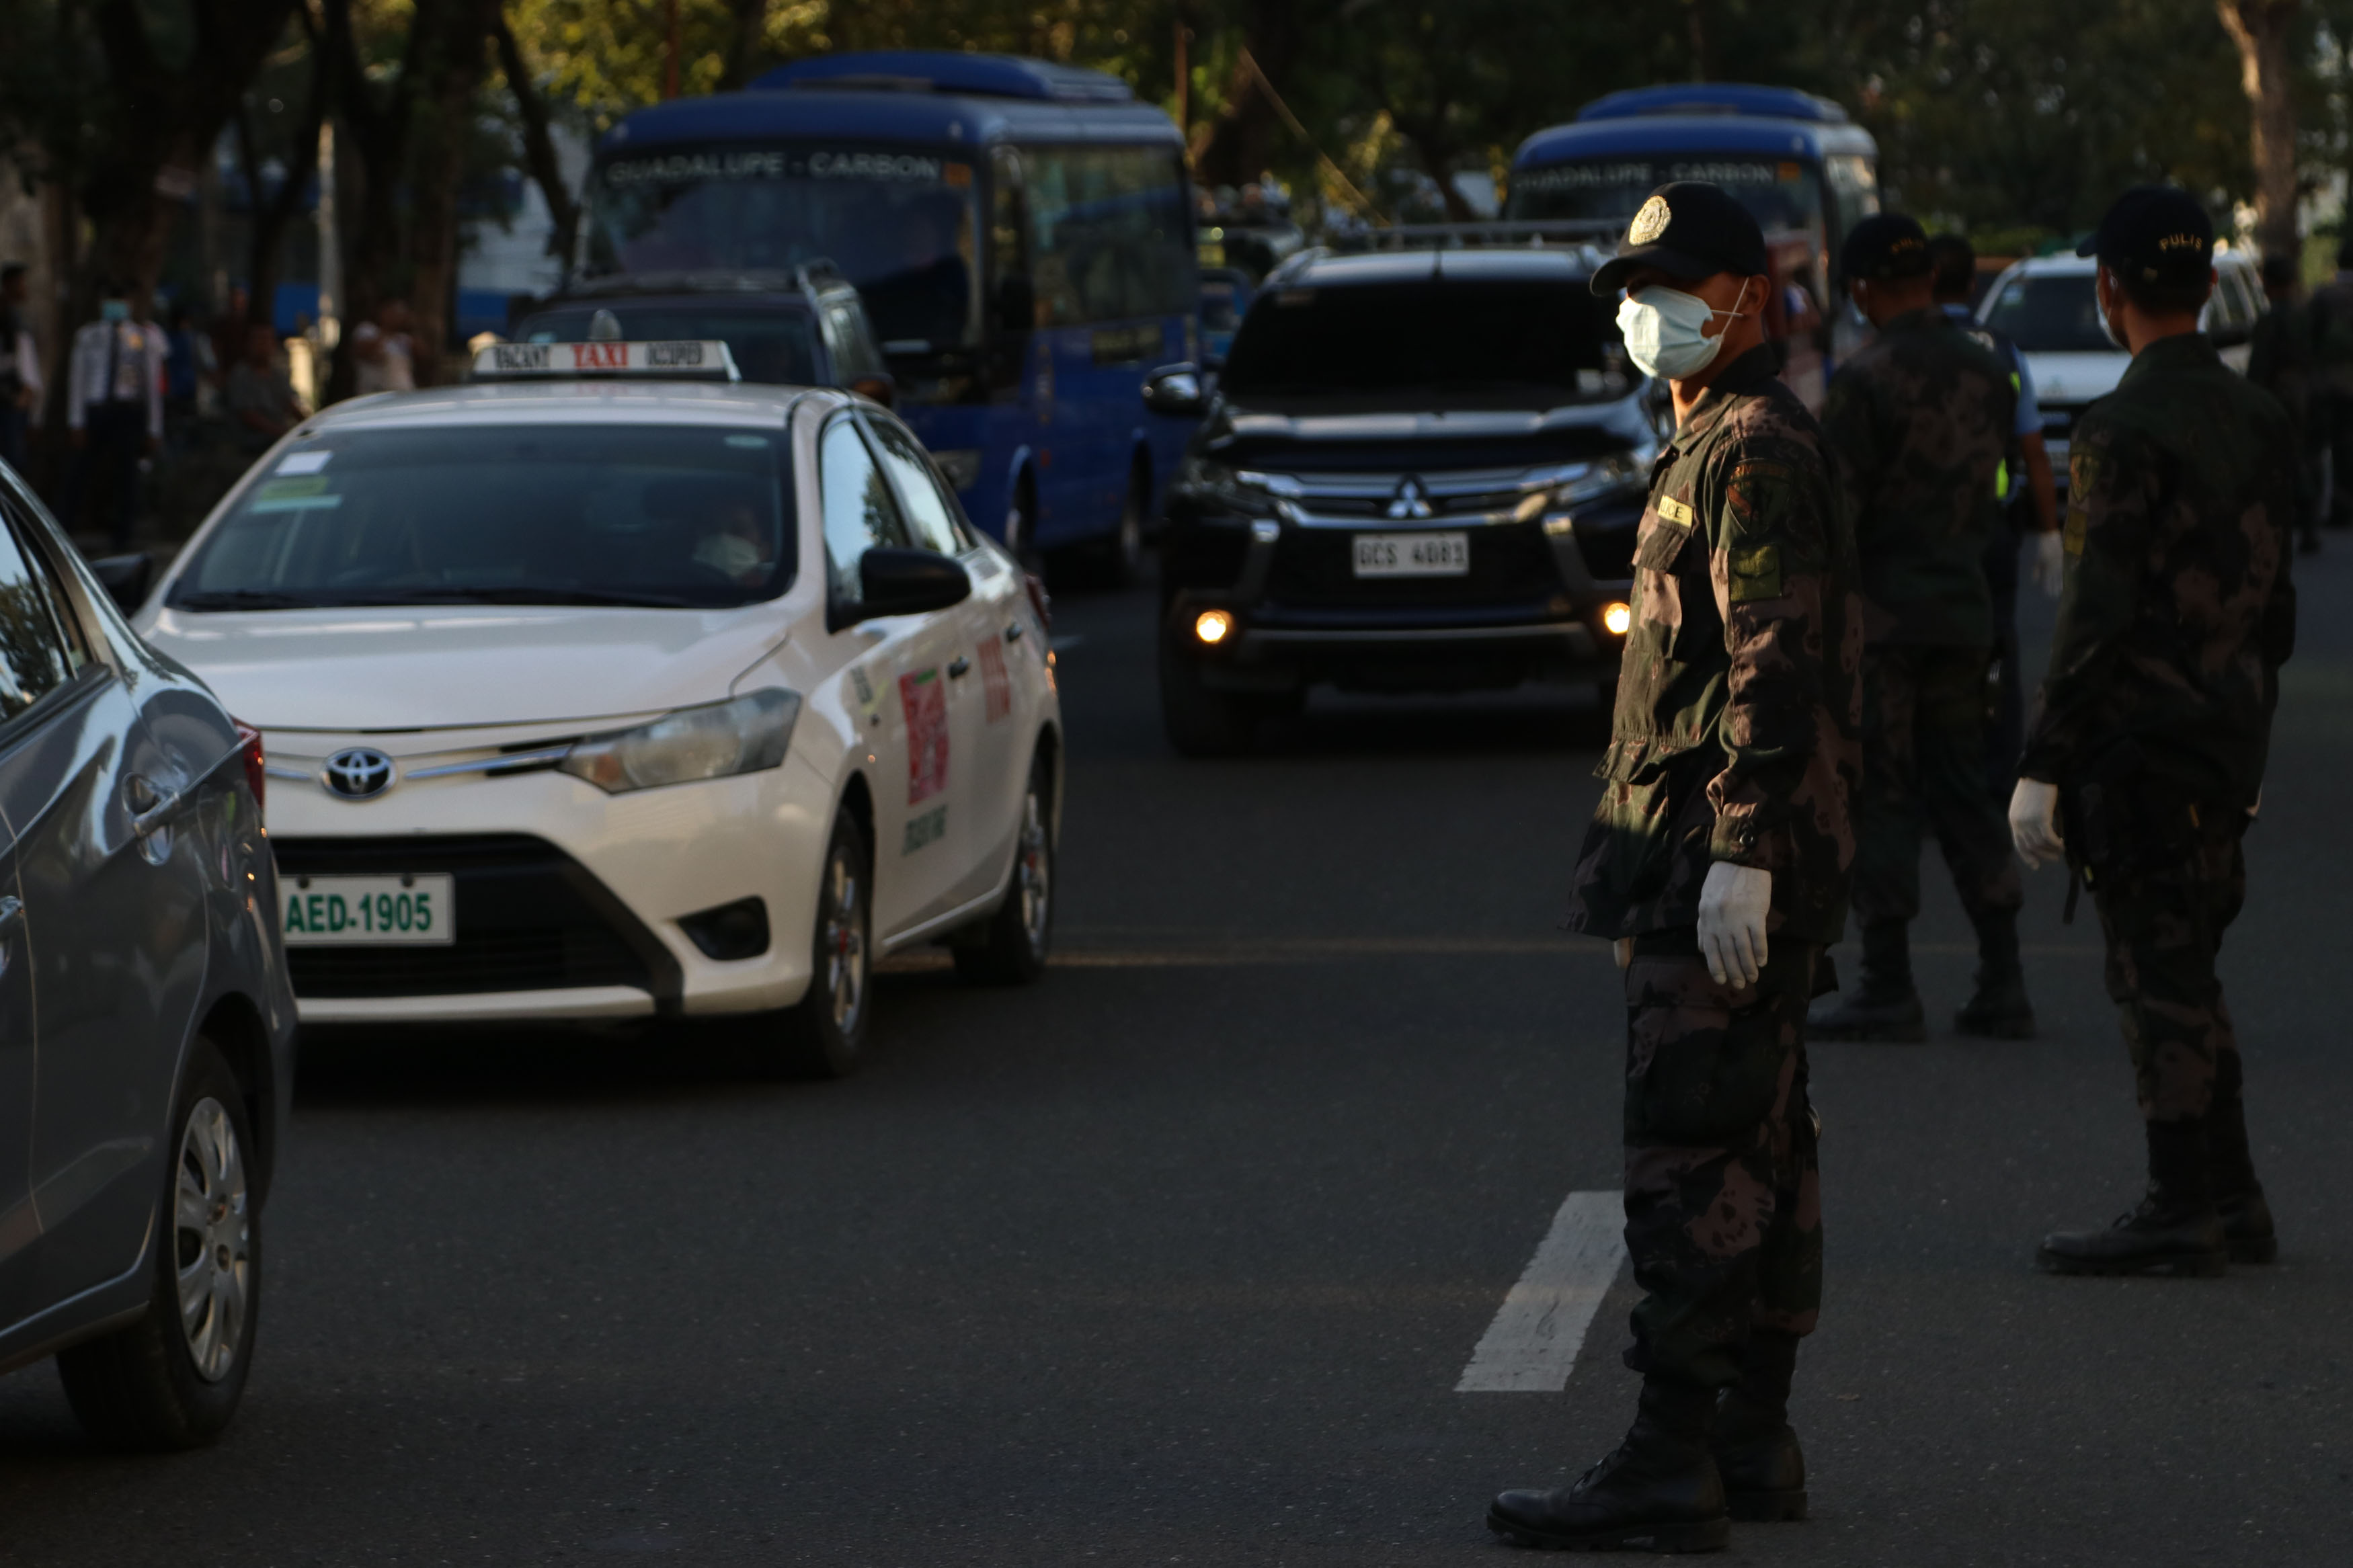 CHECKPOINT. Authorities man a checkpoint in Cebu City. Photo by Gelo Litonjua/Rappler 